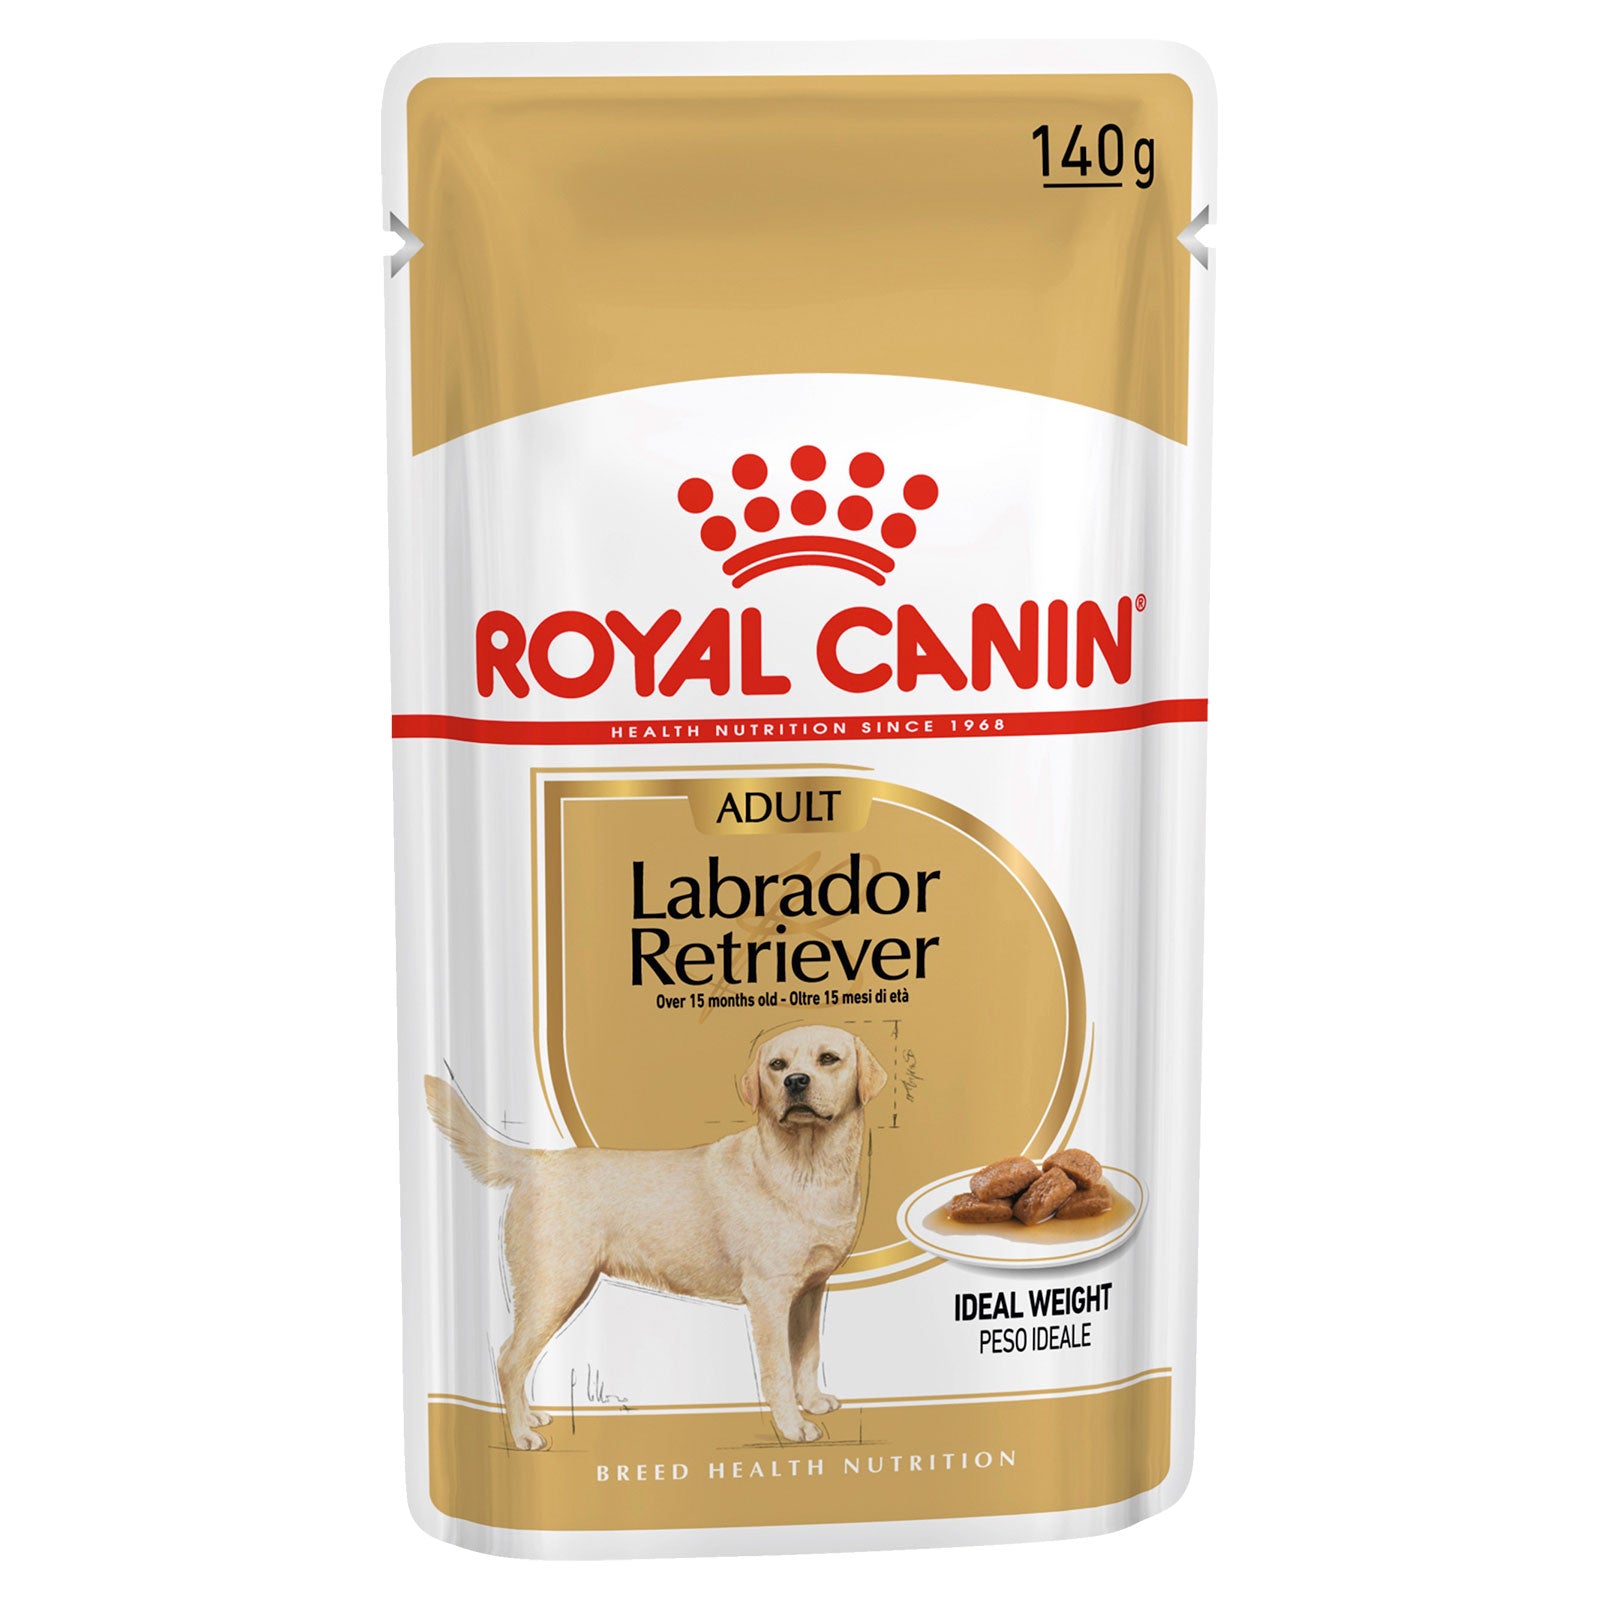 Royal Canin Dog Food Pouch Adult Labrador